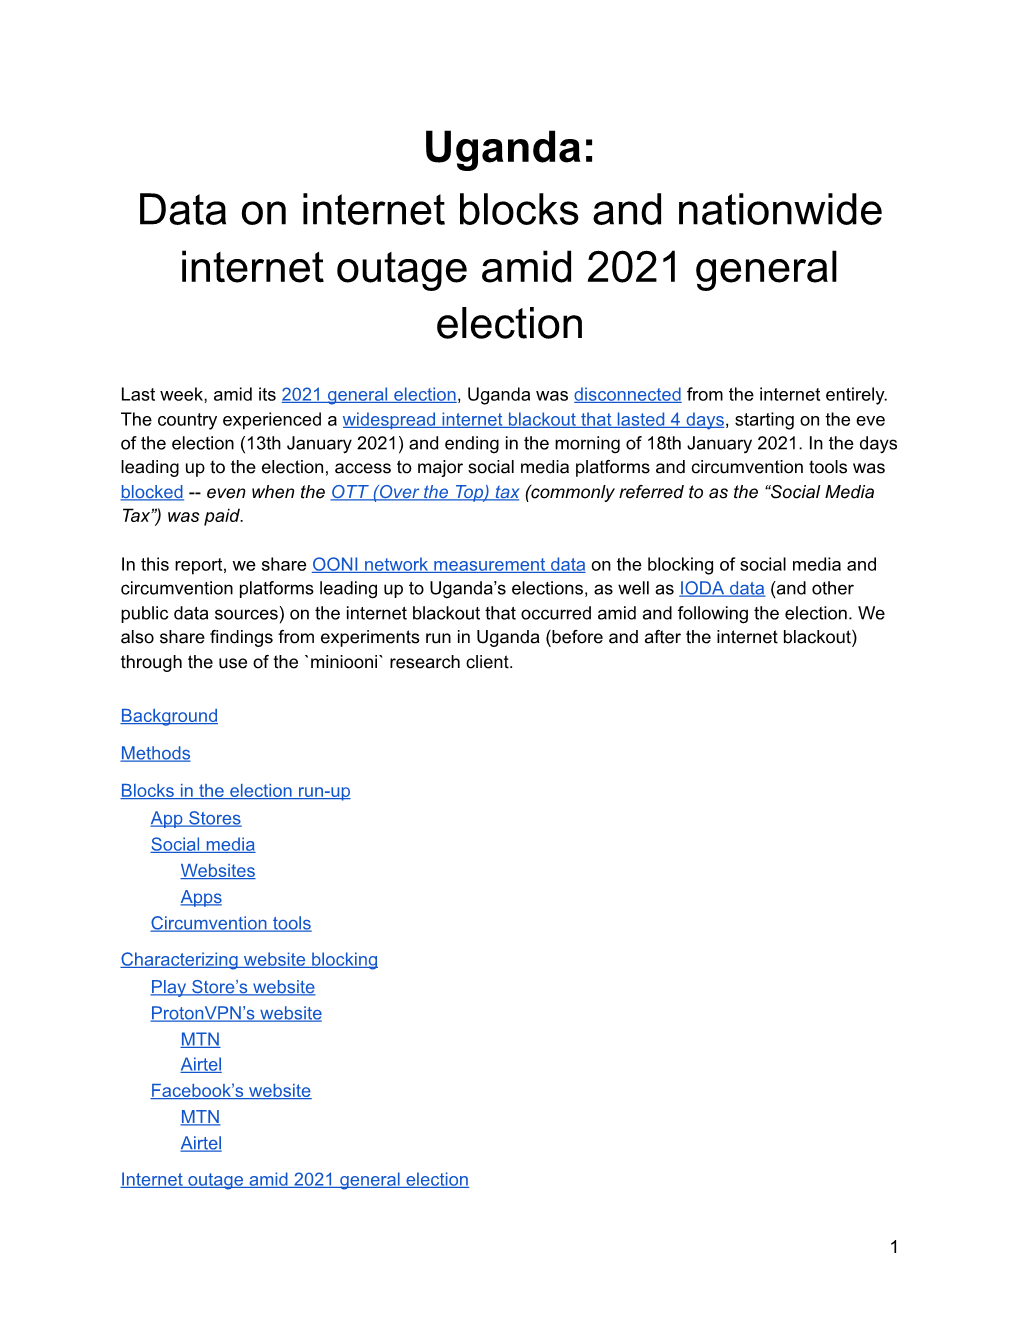 Uganda: Data on Internet Blocks and Nationwide Internet Outage Amid 2021 General Election